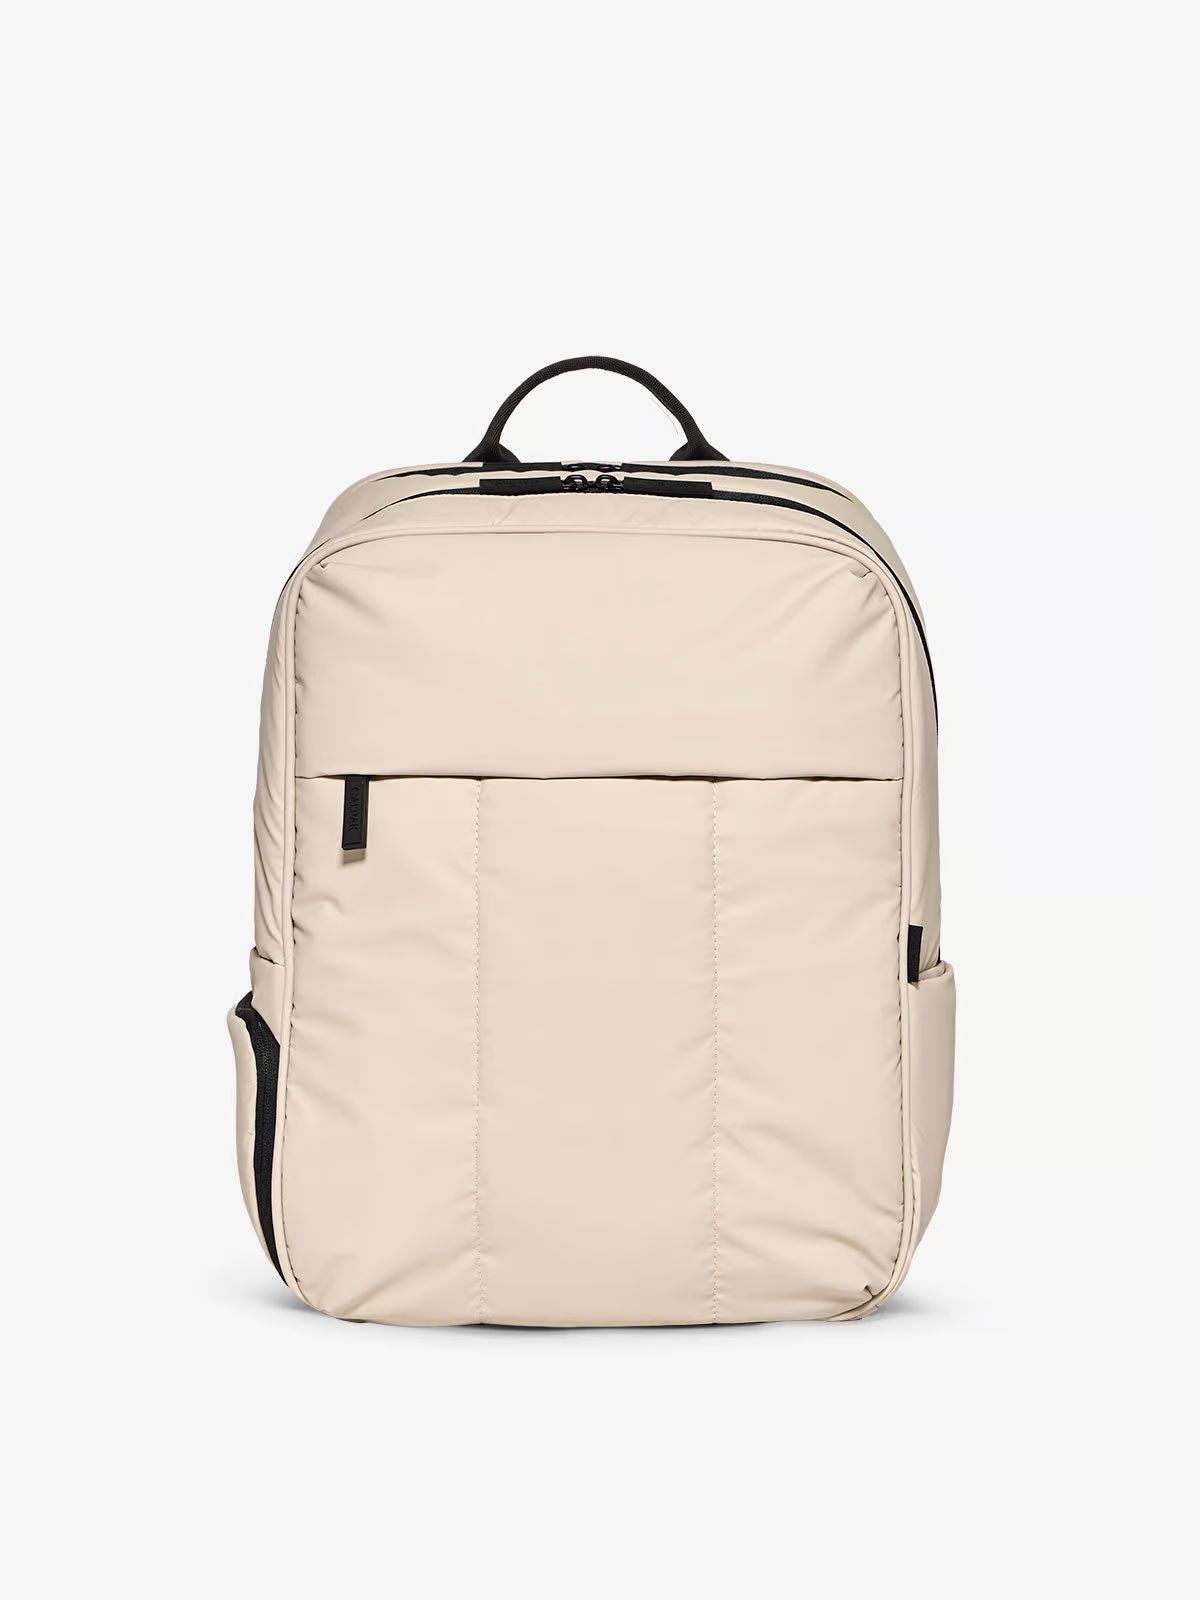 Luka 17 inch Laptop Backpack | CALPAK | CALPAK Travel